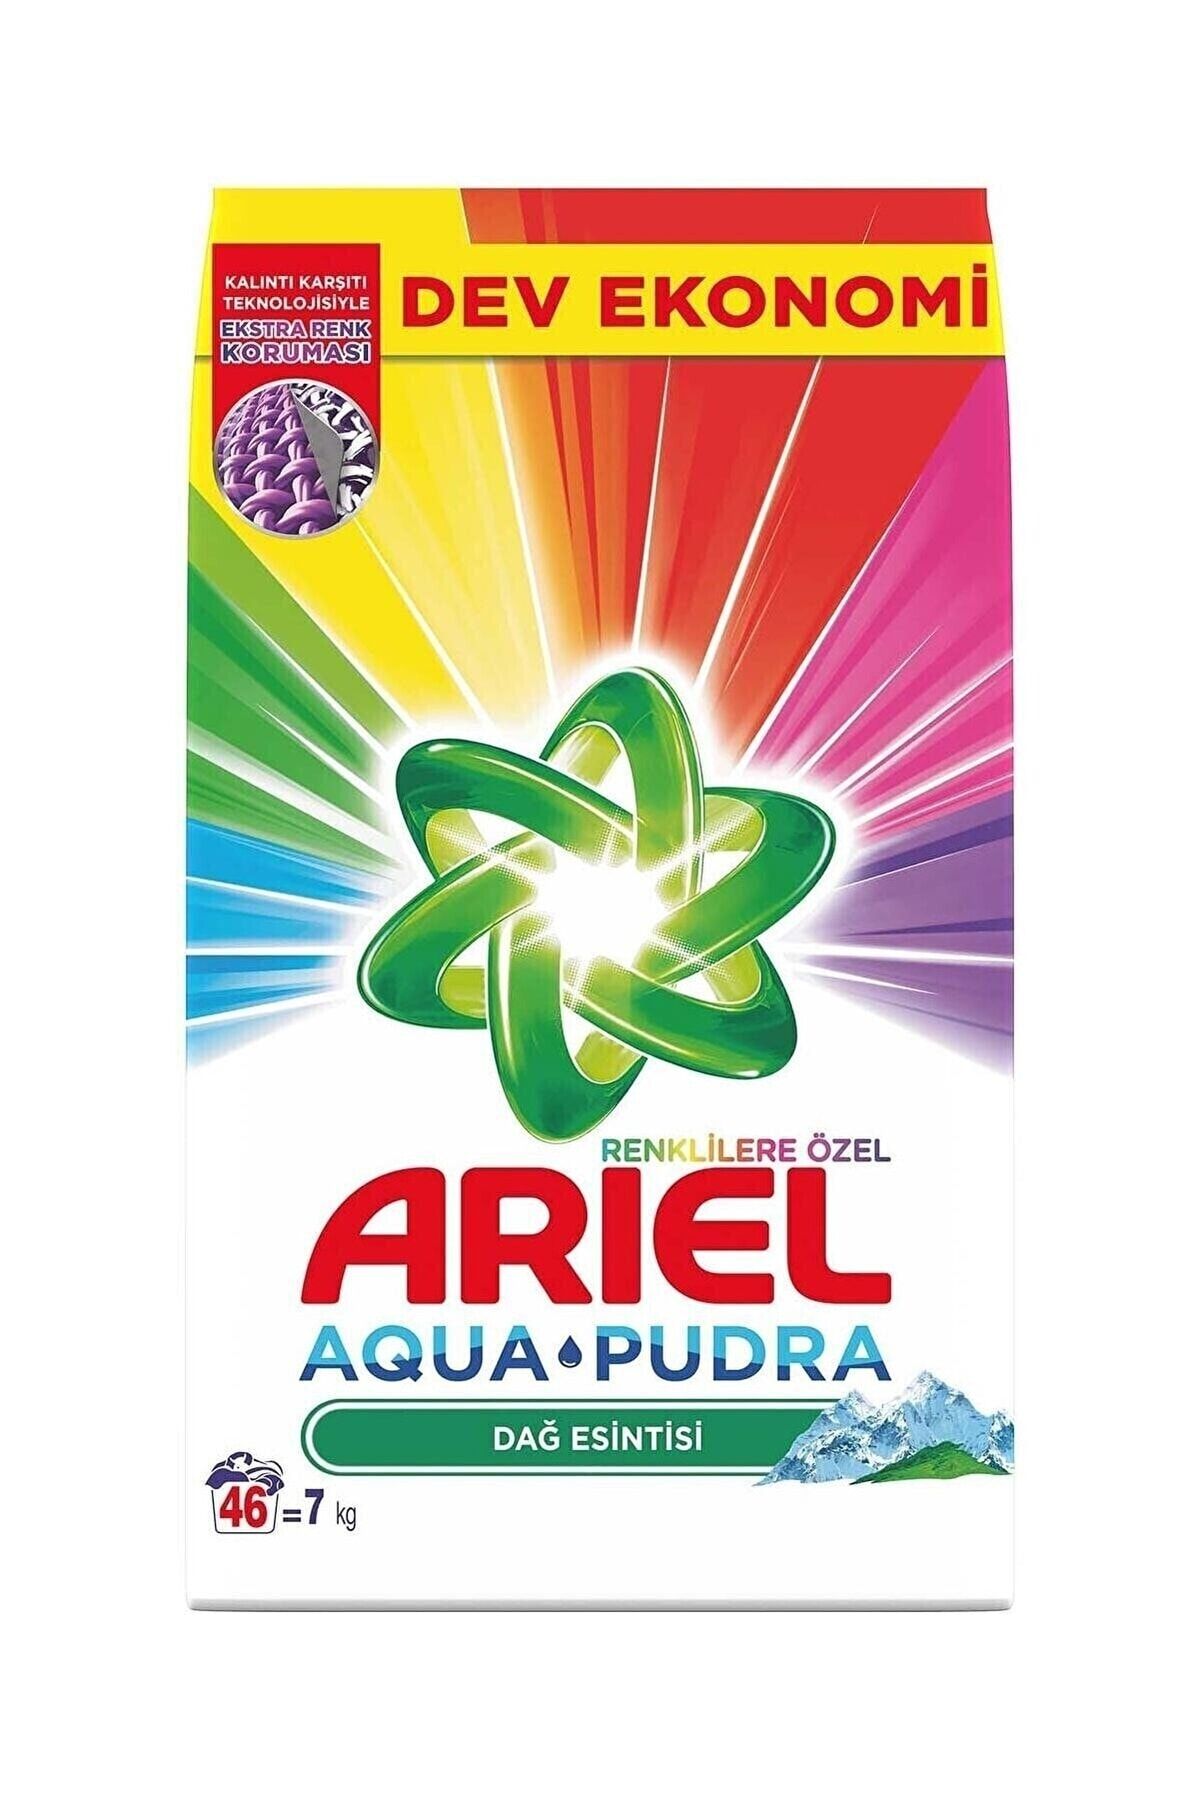 Ariel Aquapudra Dağ Esintisi Renklilere Özel 7 kg Toz Çamaşır Deterjanı